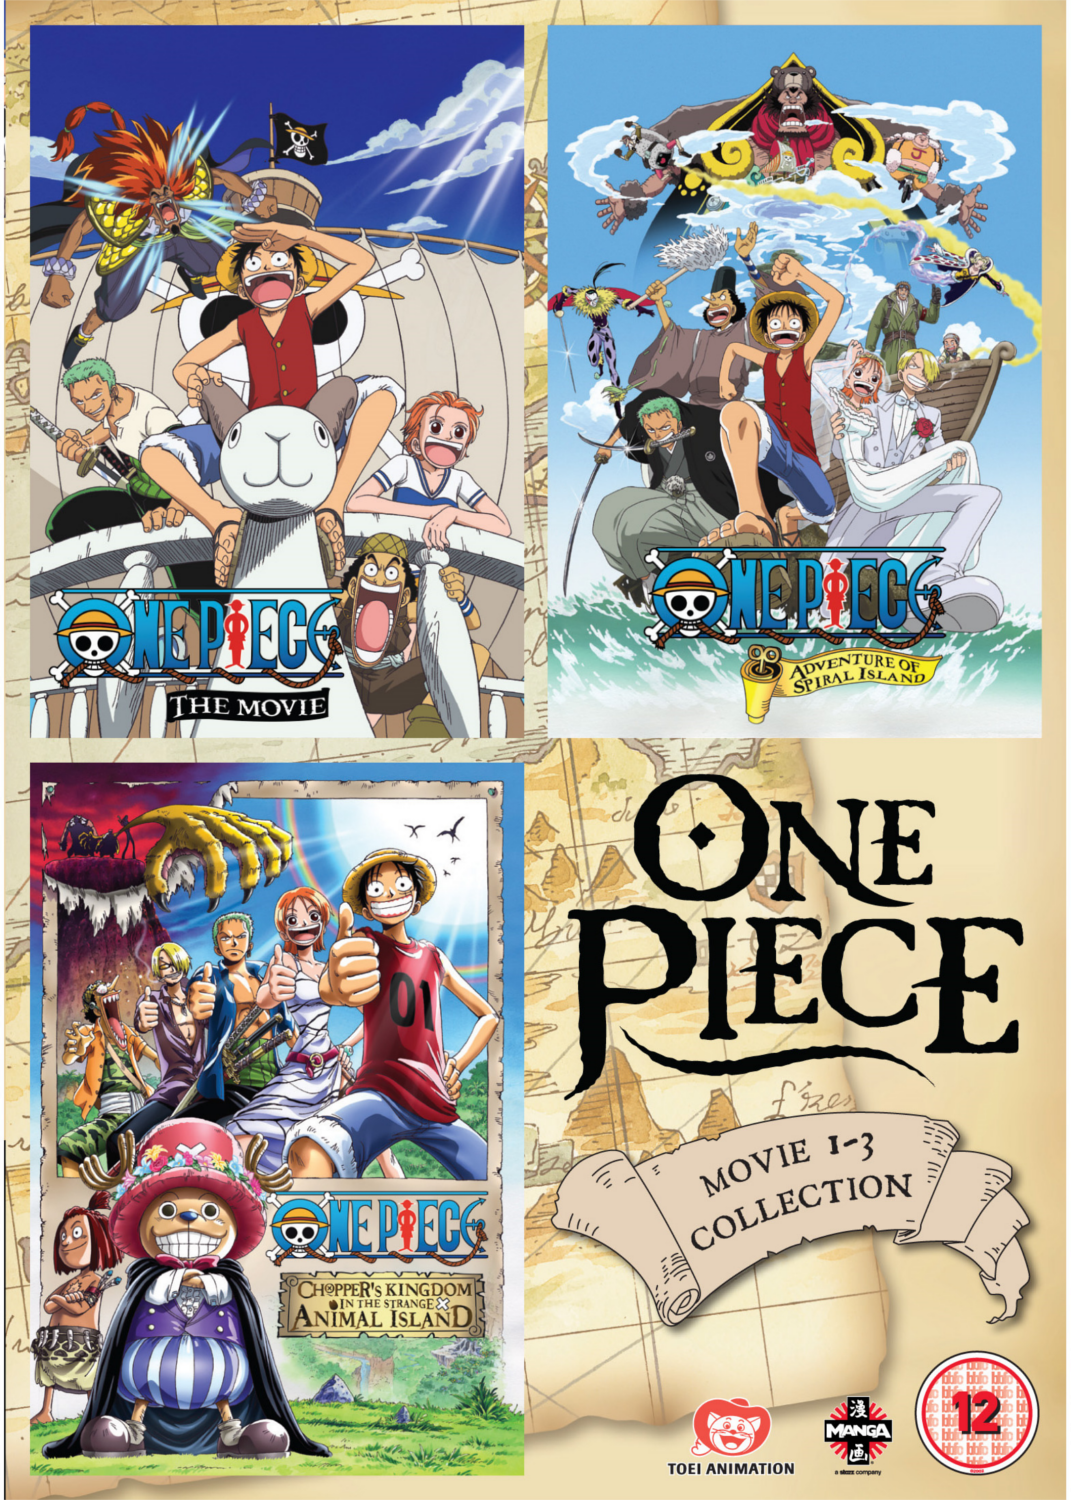 Funimation (UK and Ireland), One Piece Wiki